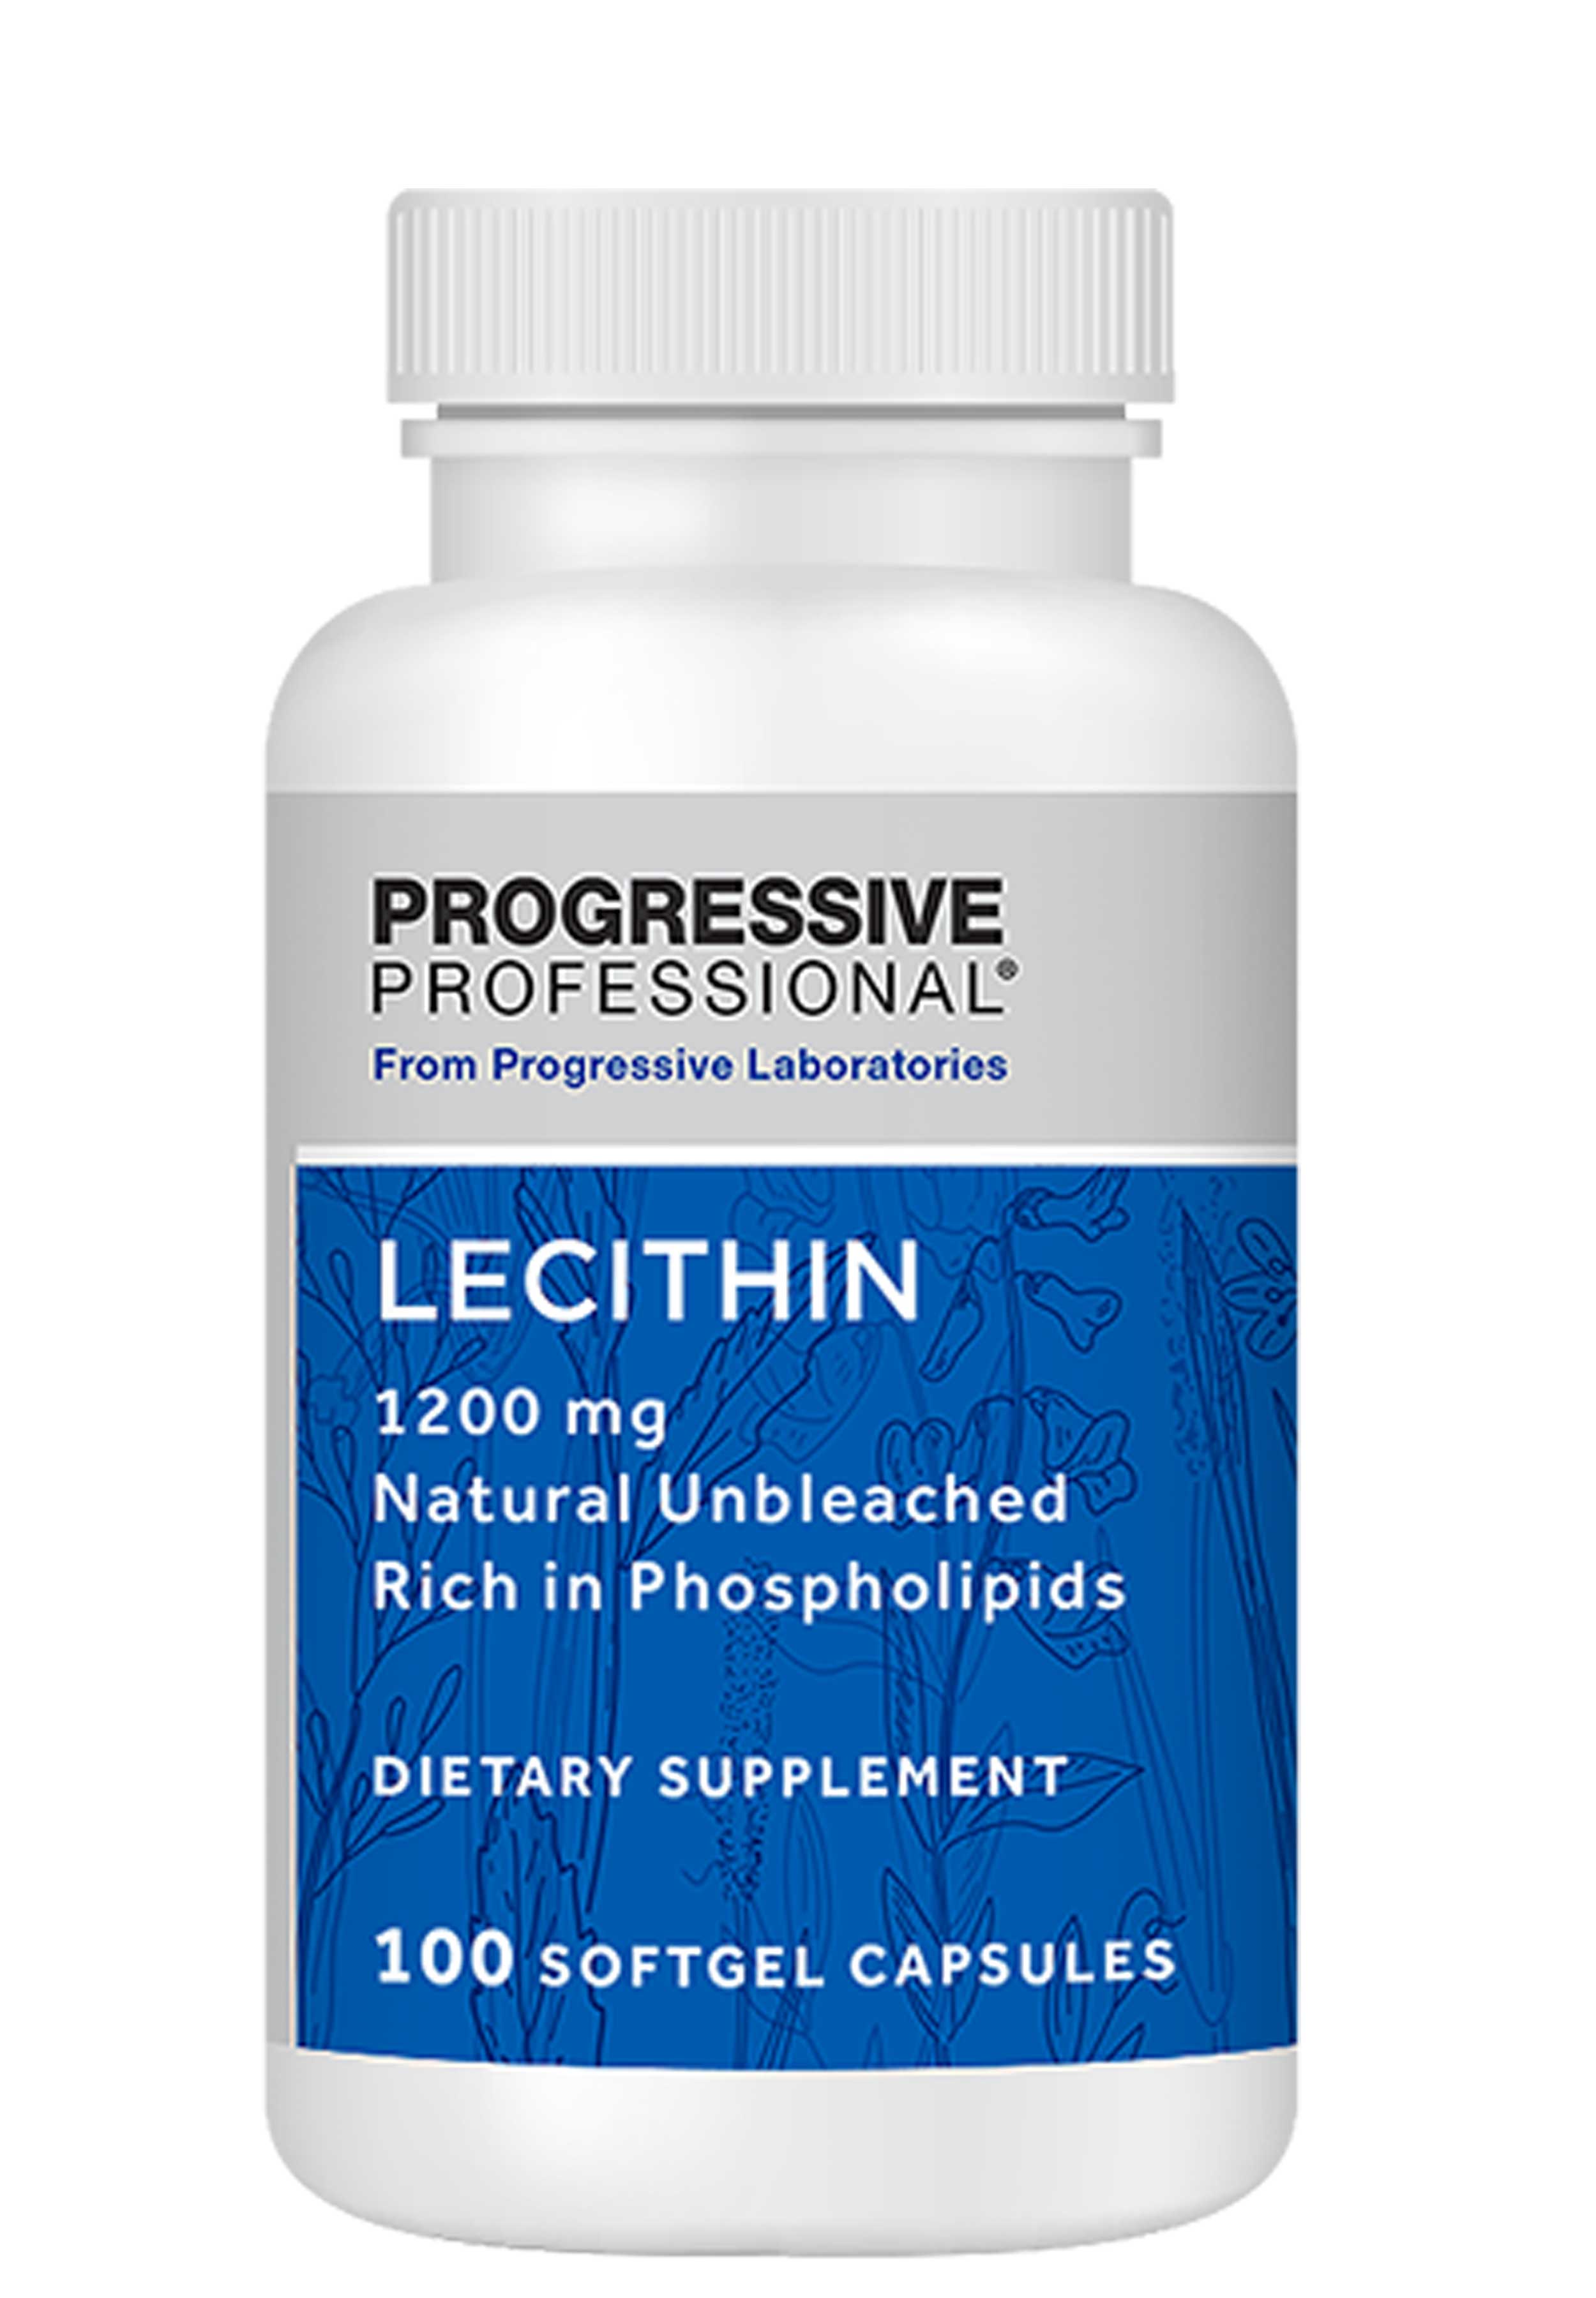 Progressive Laboratories Lecithin Capsules